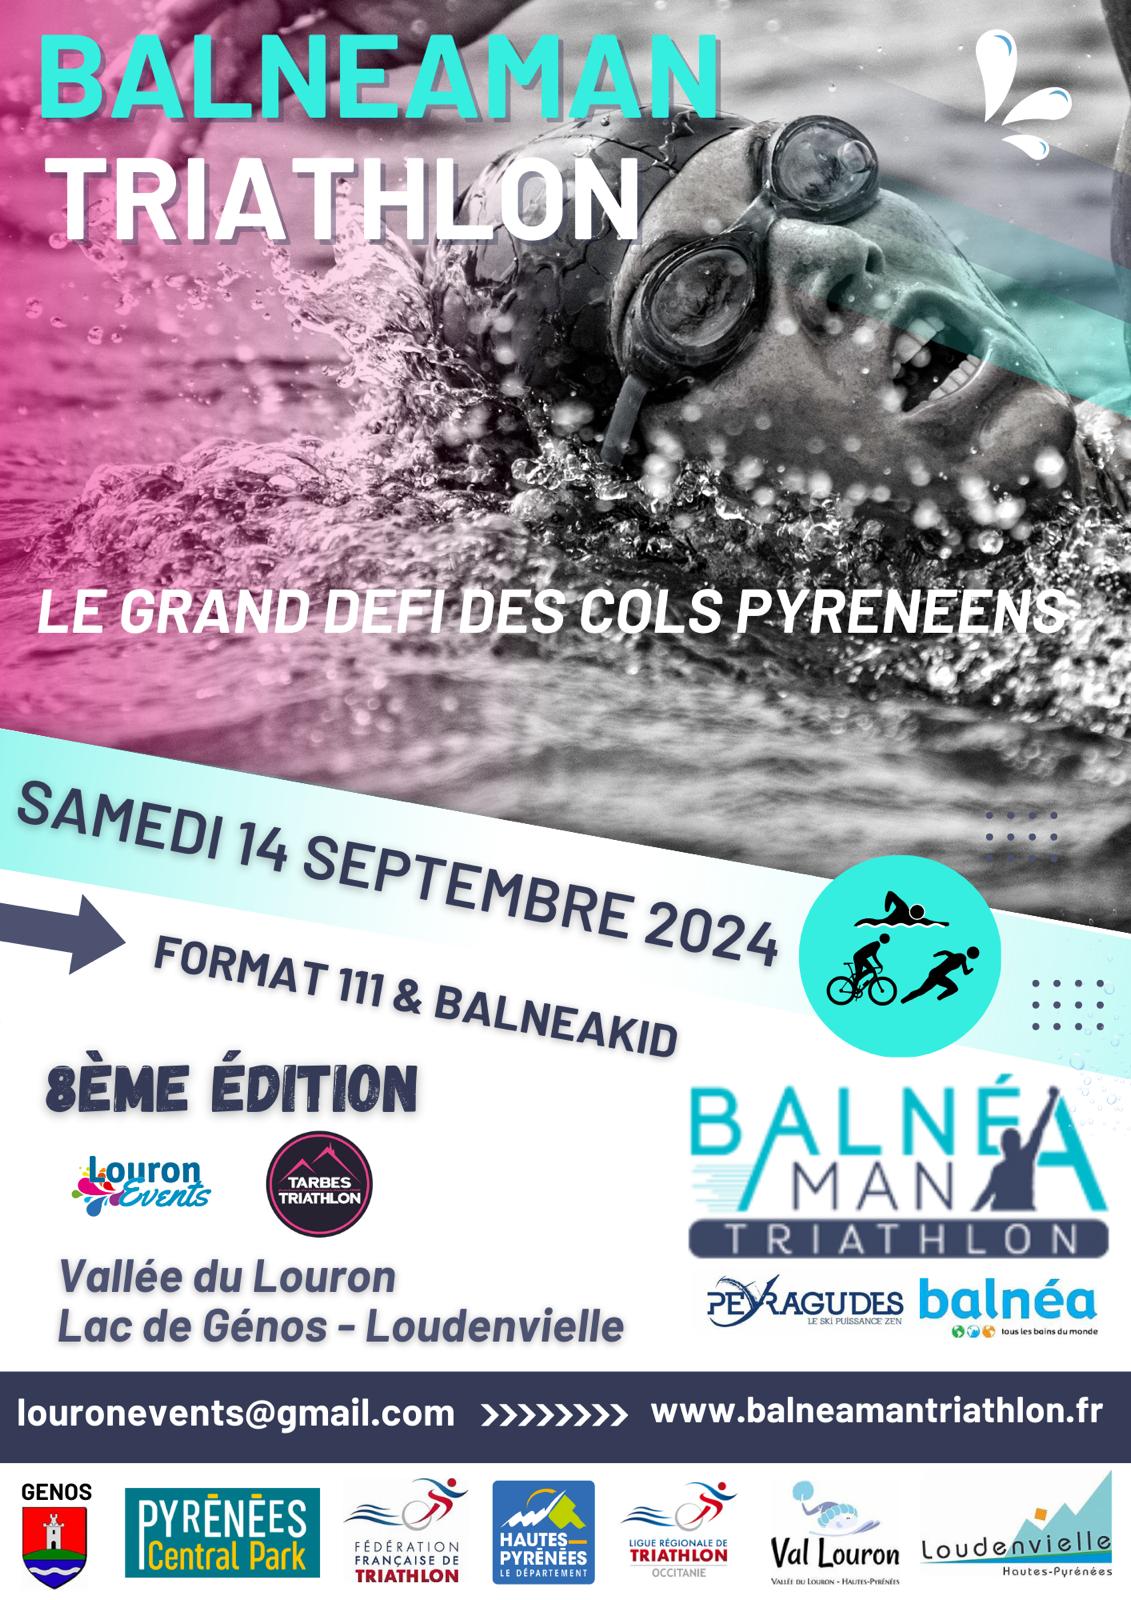 triathlon balnéaman 2024 Loudenvielle